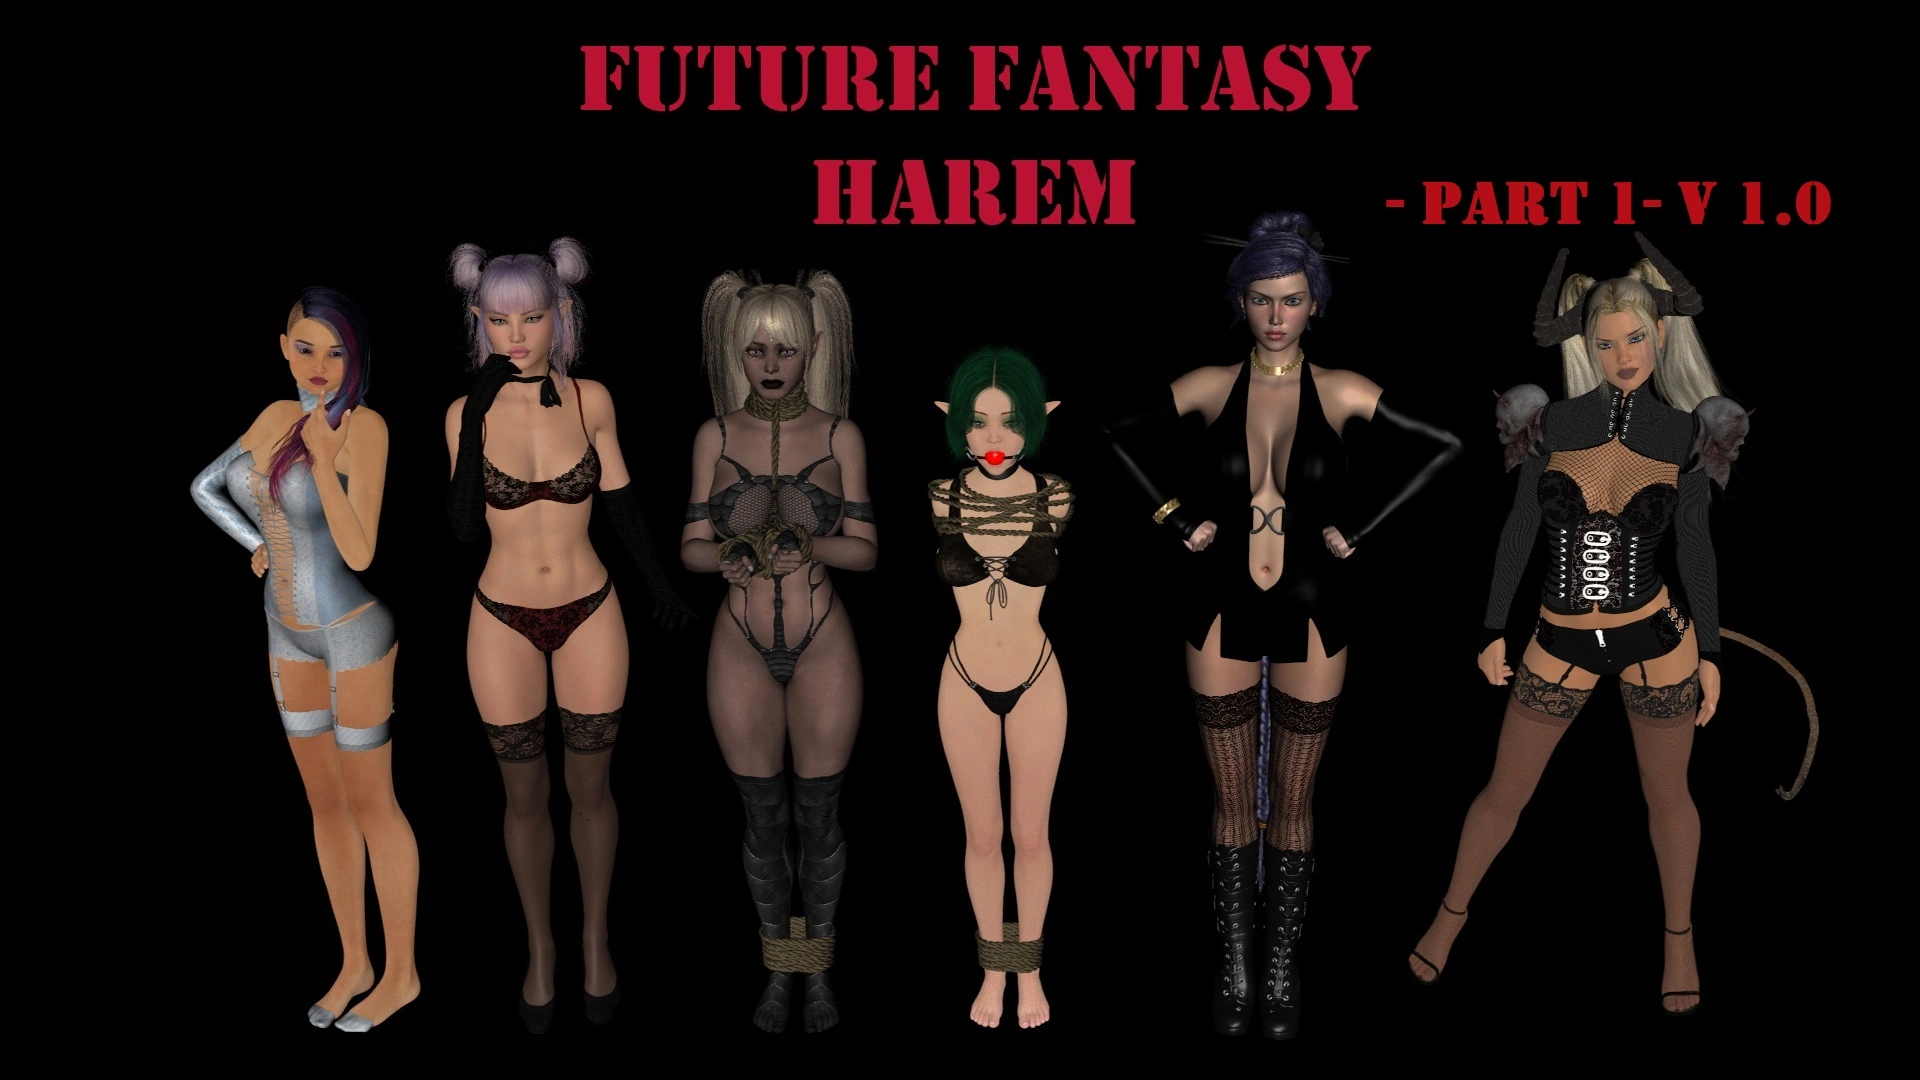 Future Fantasy Harem - Part 1 header image